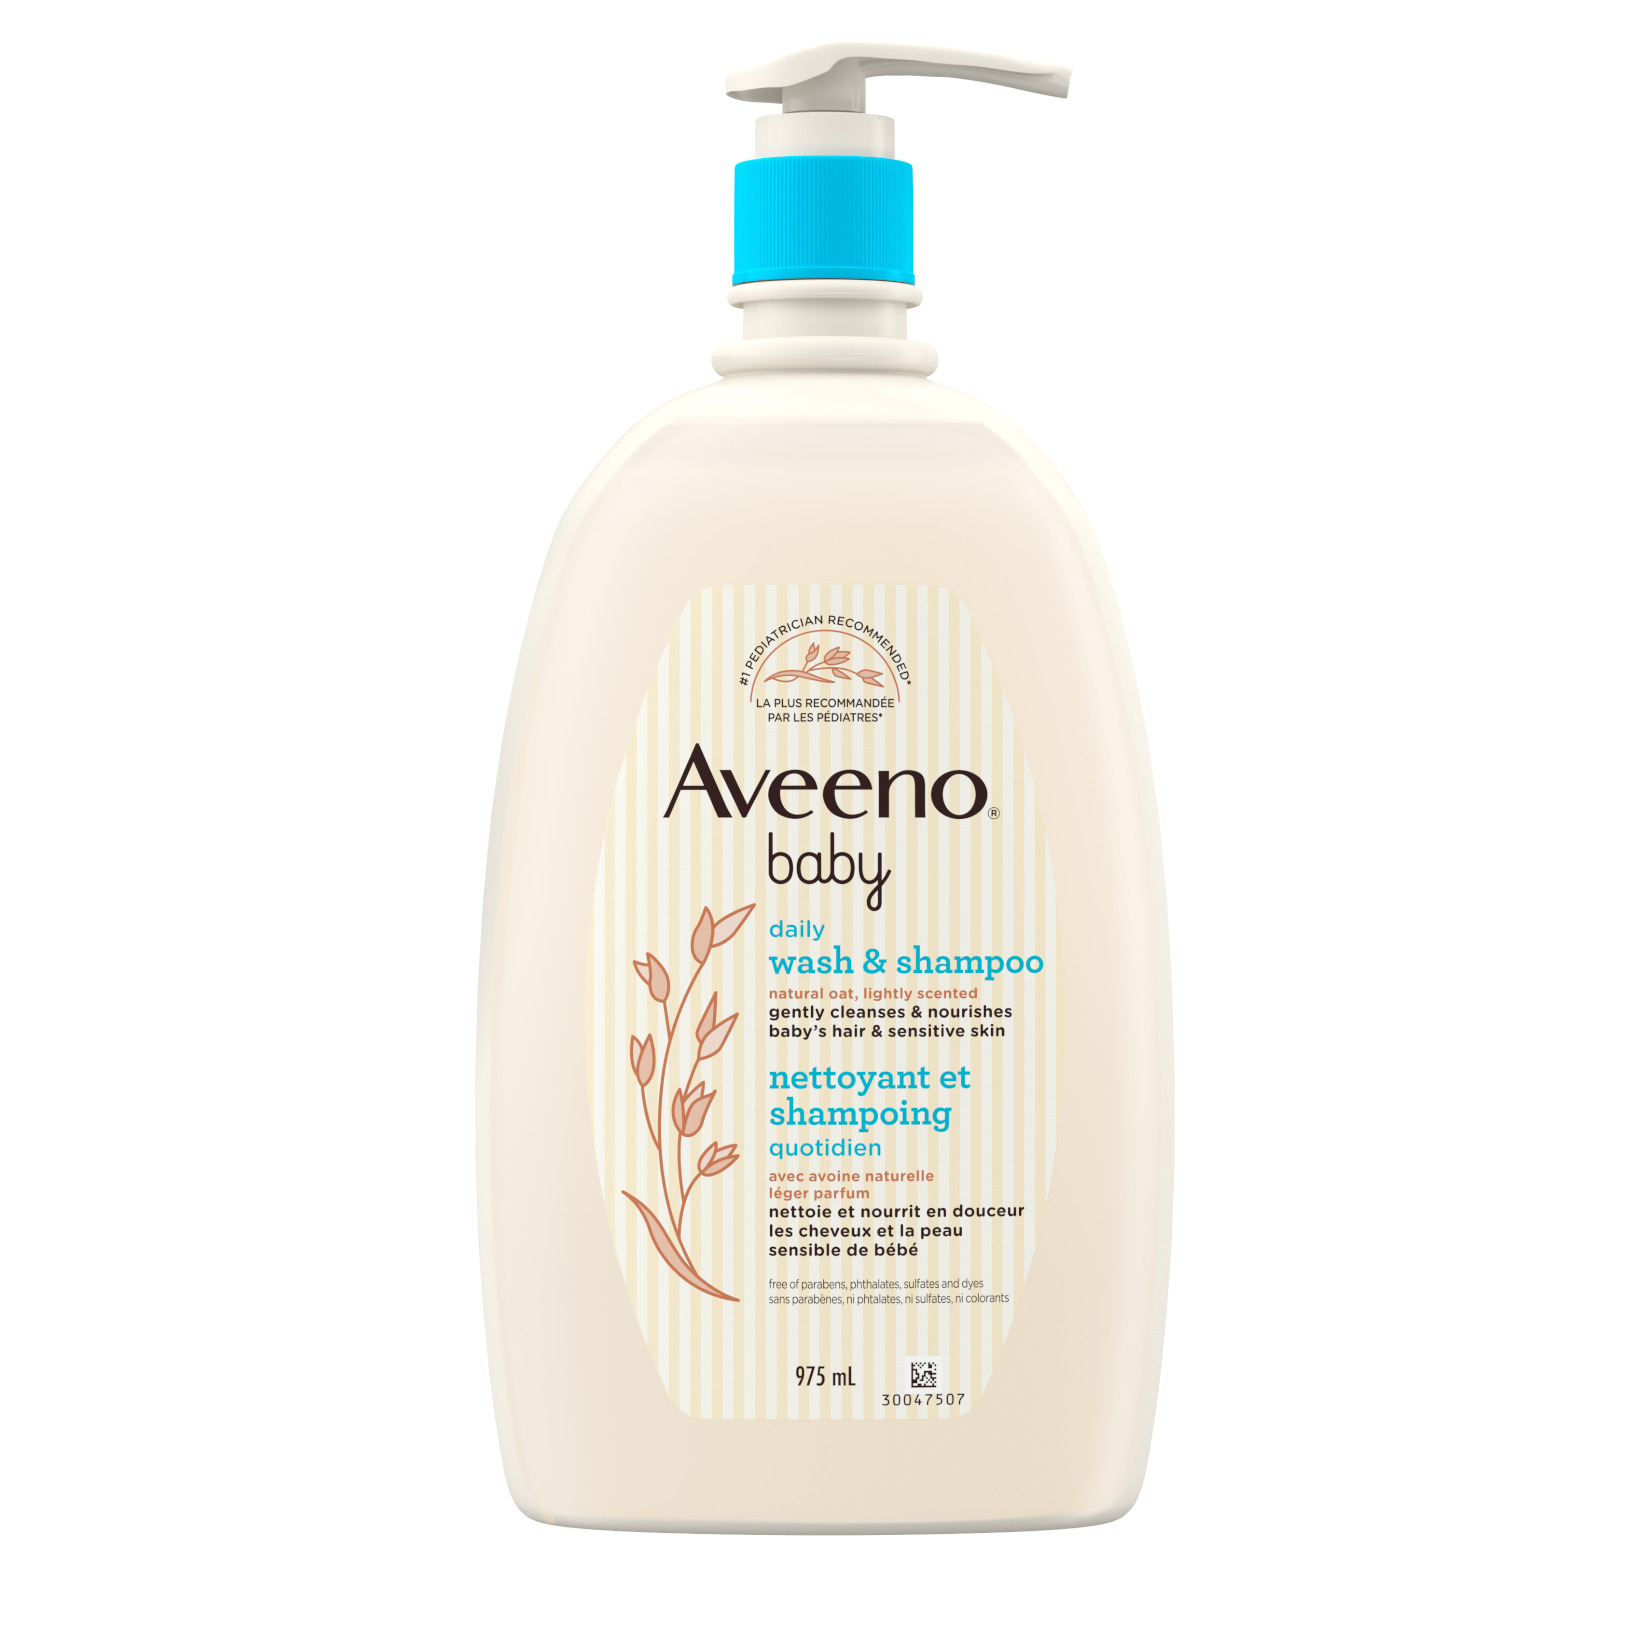 975ml bottle of Aveeno Baby Wash & Shampoo 